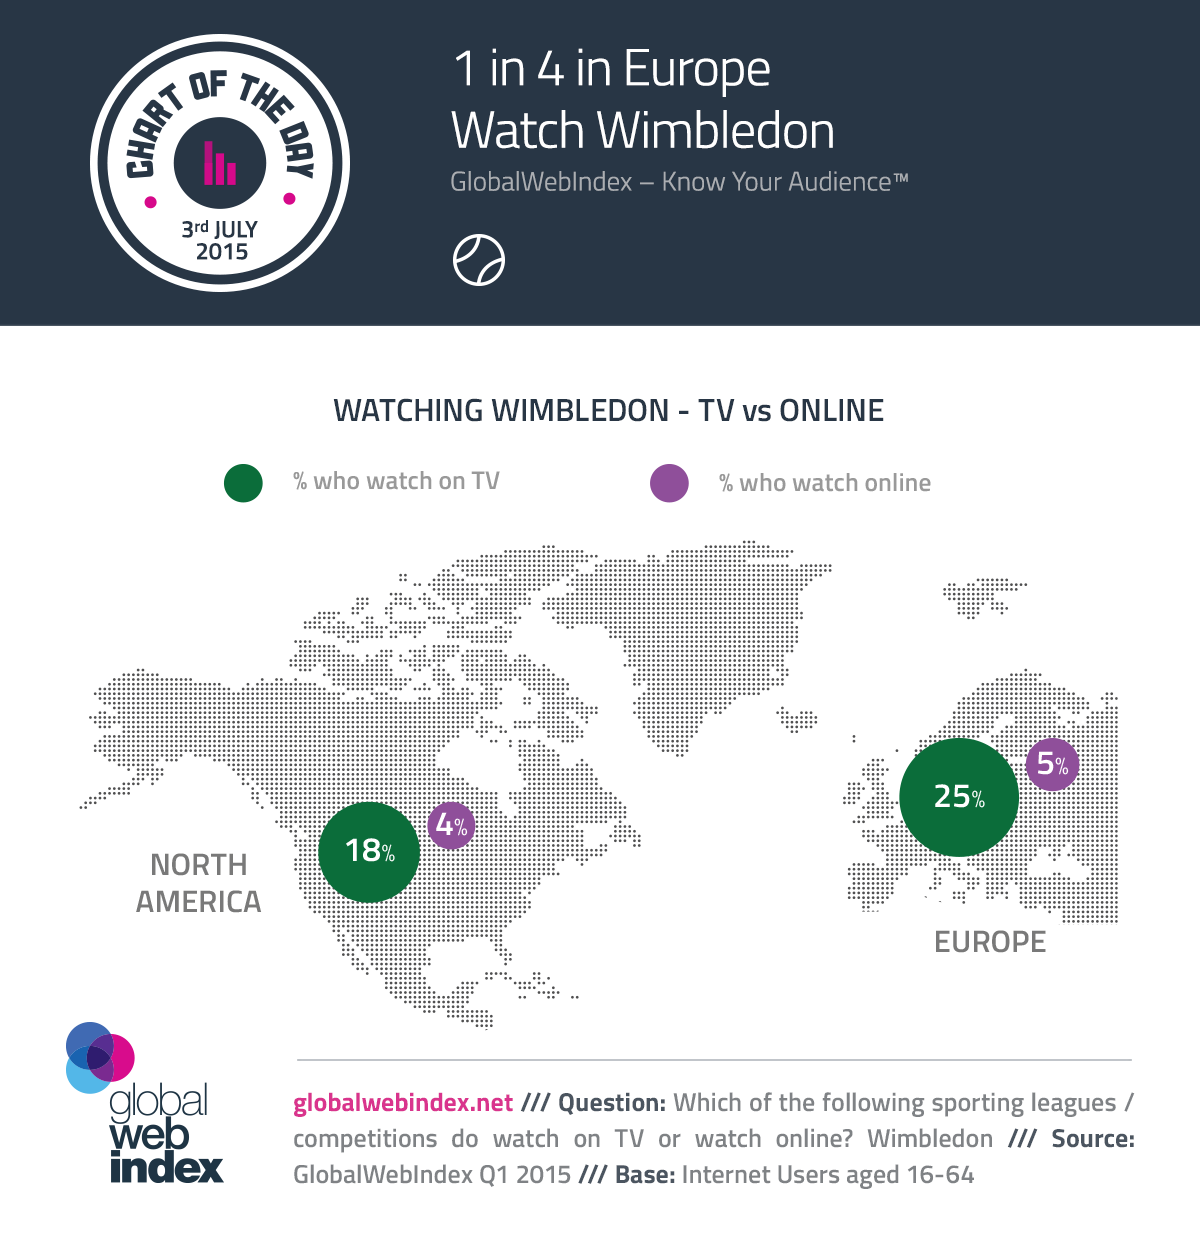 1 in 4 in Europe Watch Wimbledon